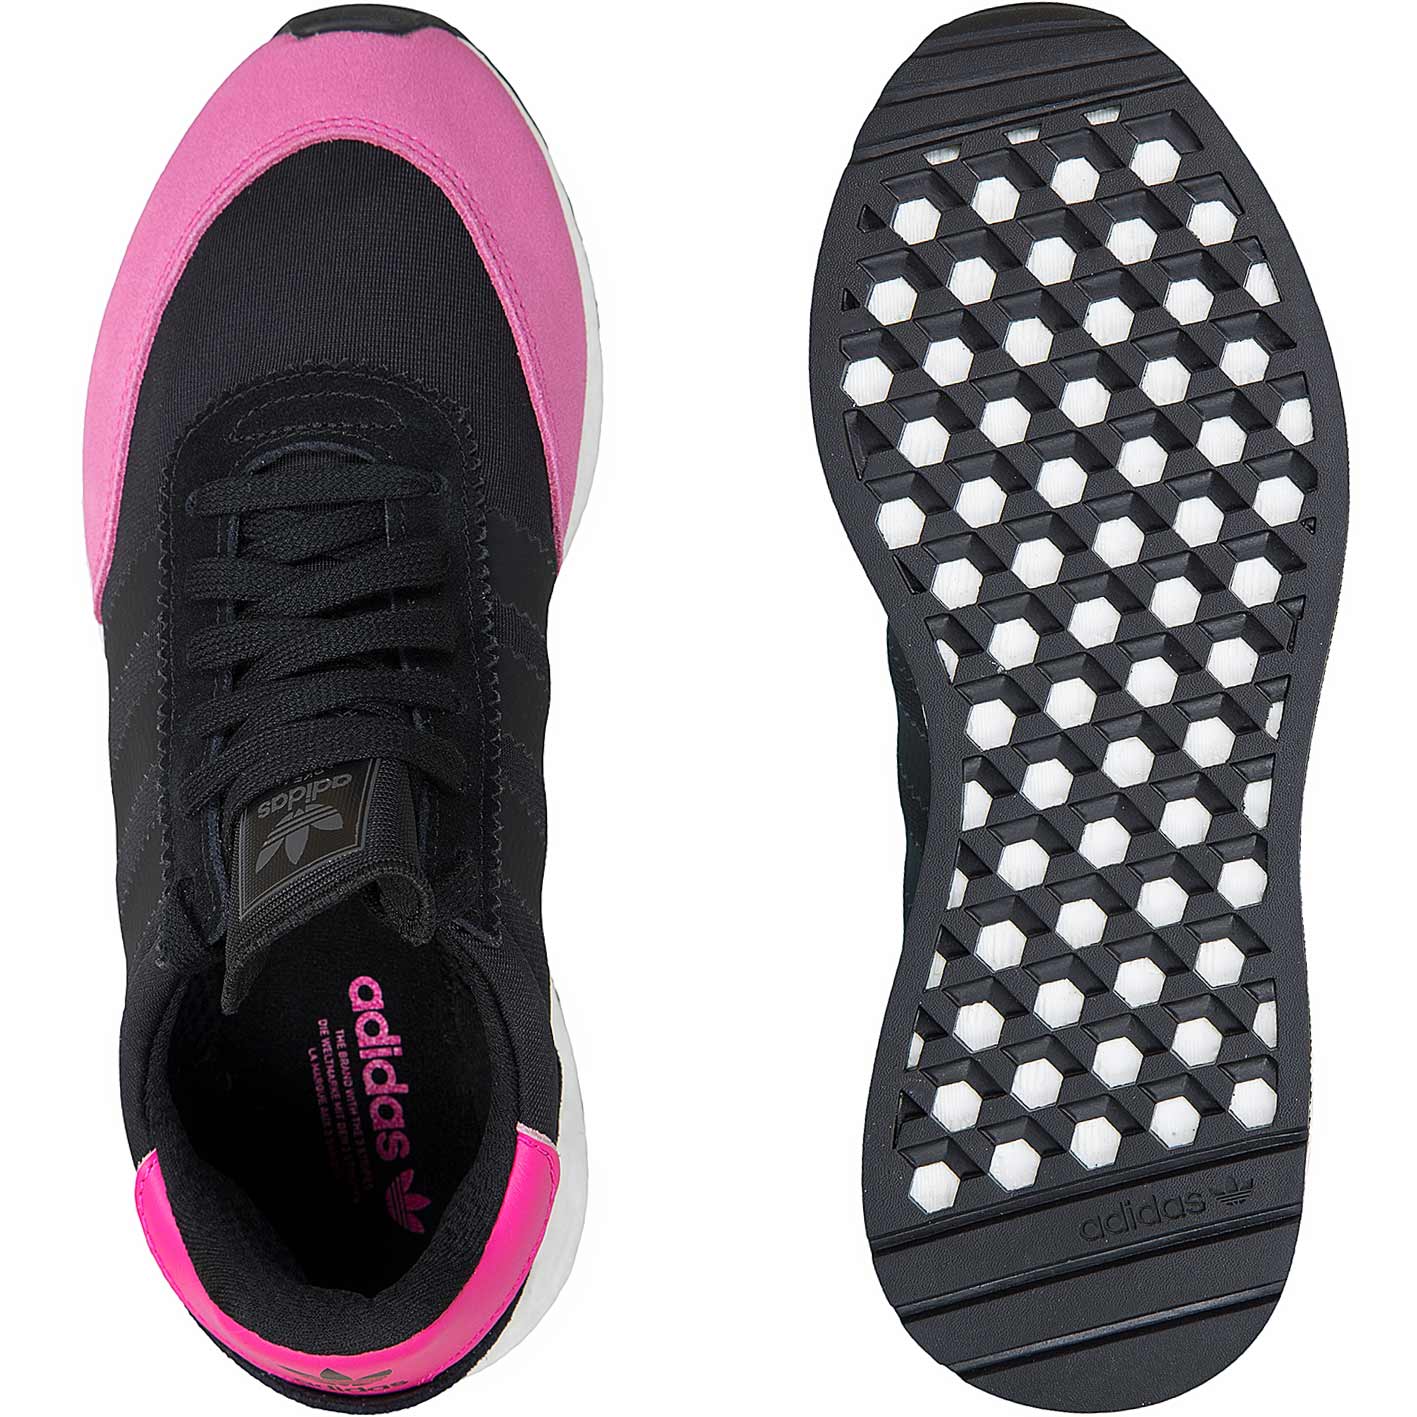 ☆ Adidas Originals Sneaker I-5923 schwarz/pink - hier bestellen!